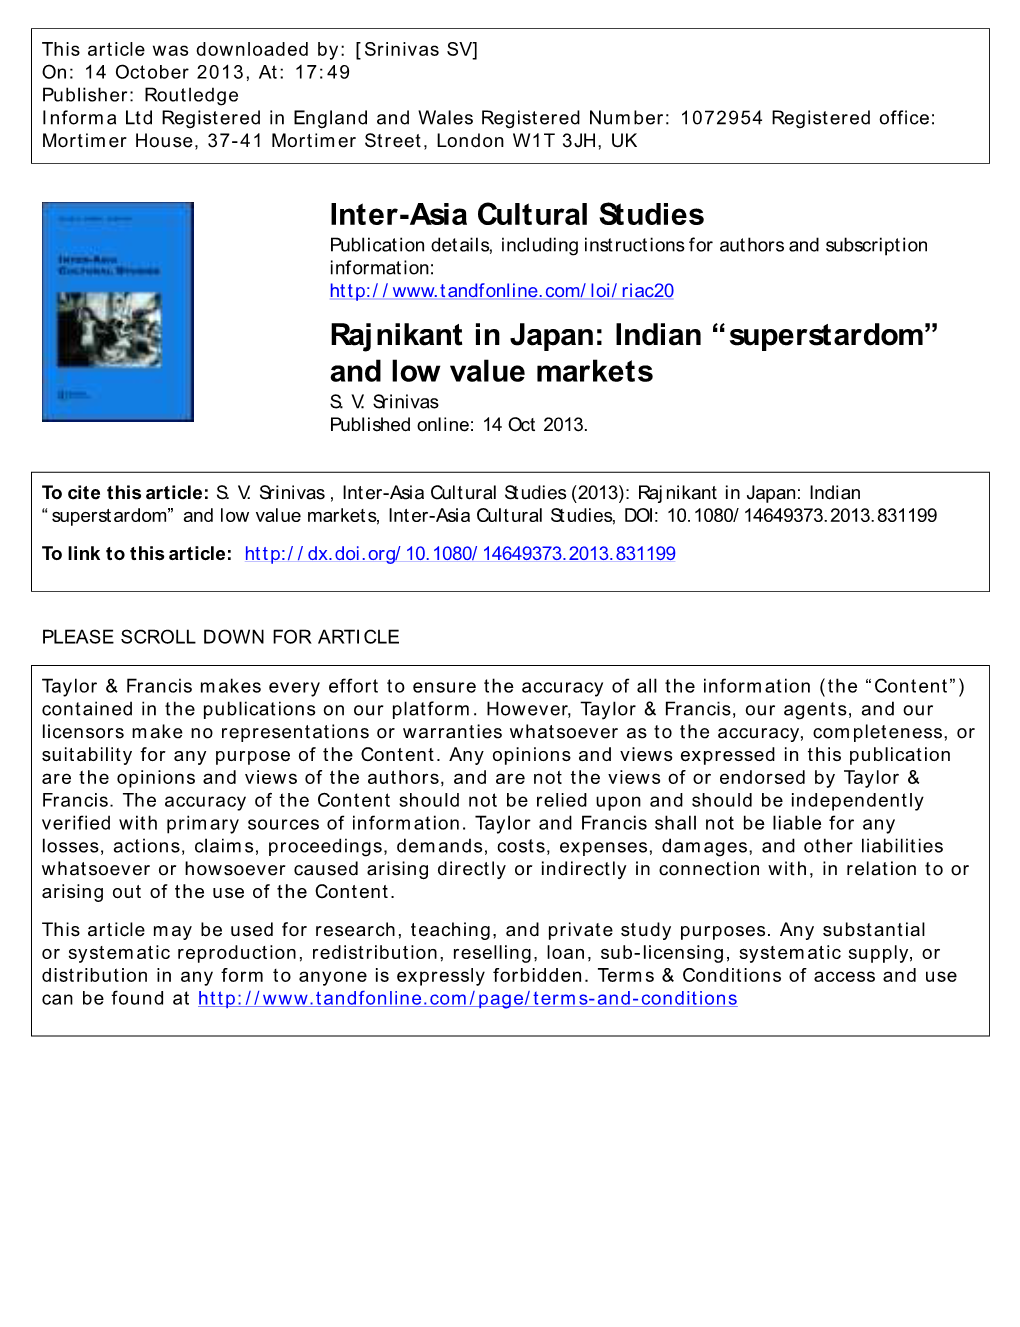 Inter-Asia Cultural Studies Rajnikant in Japan: Indian “Superstardom